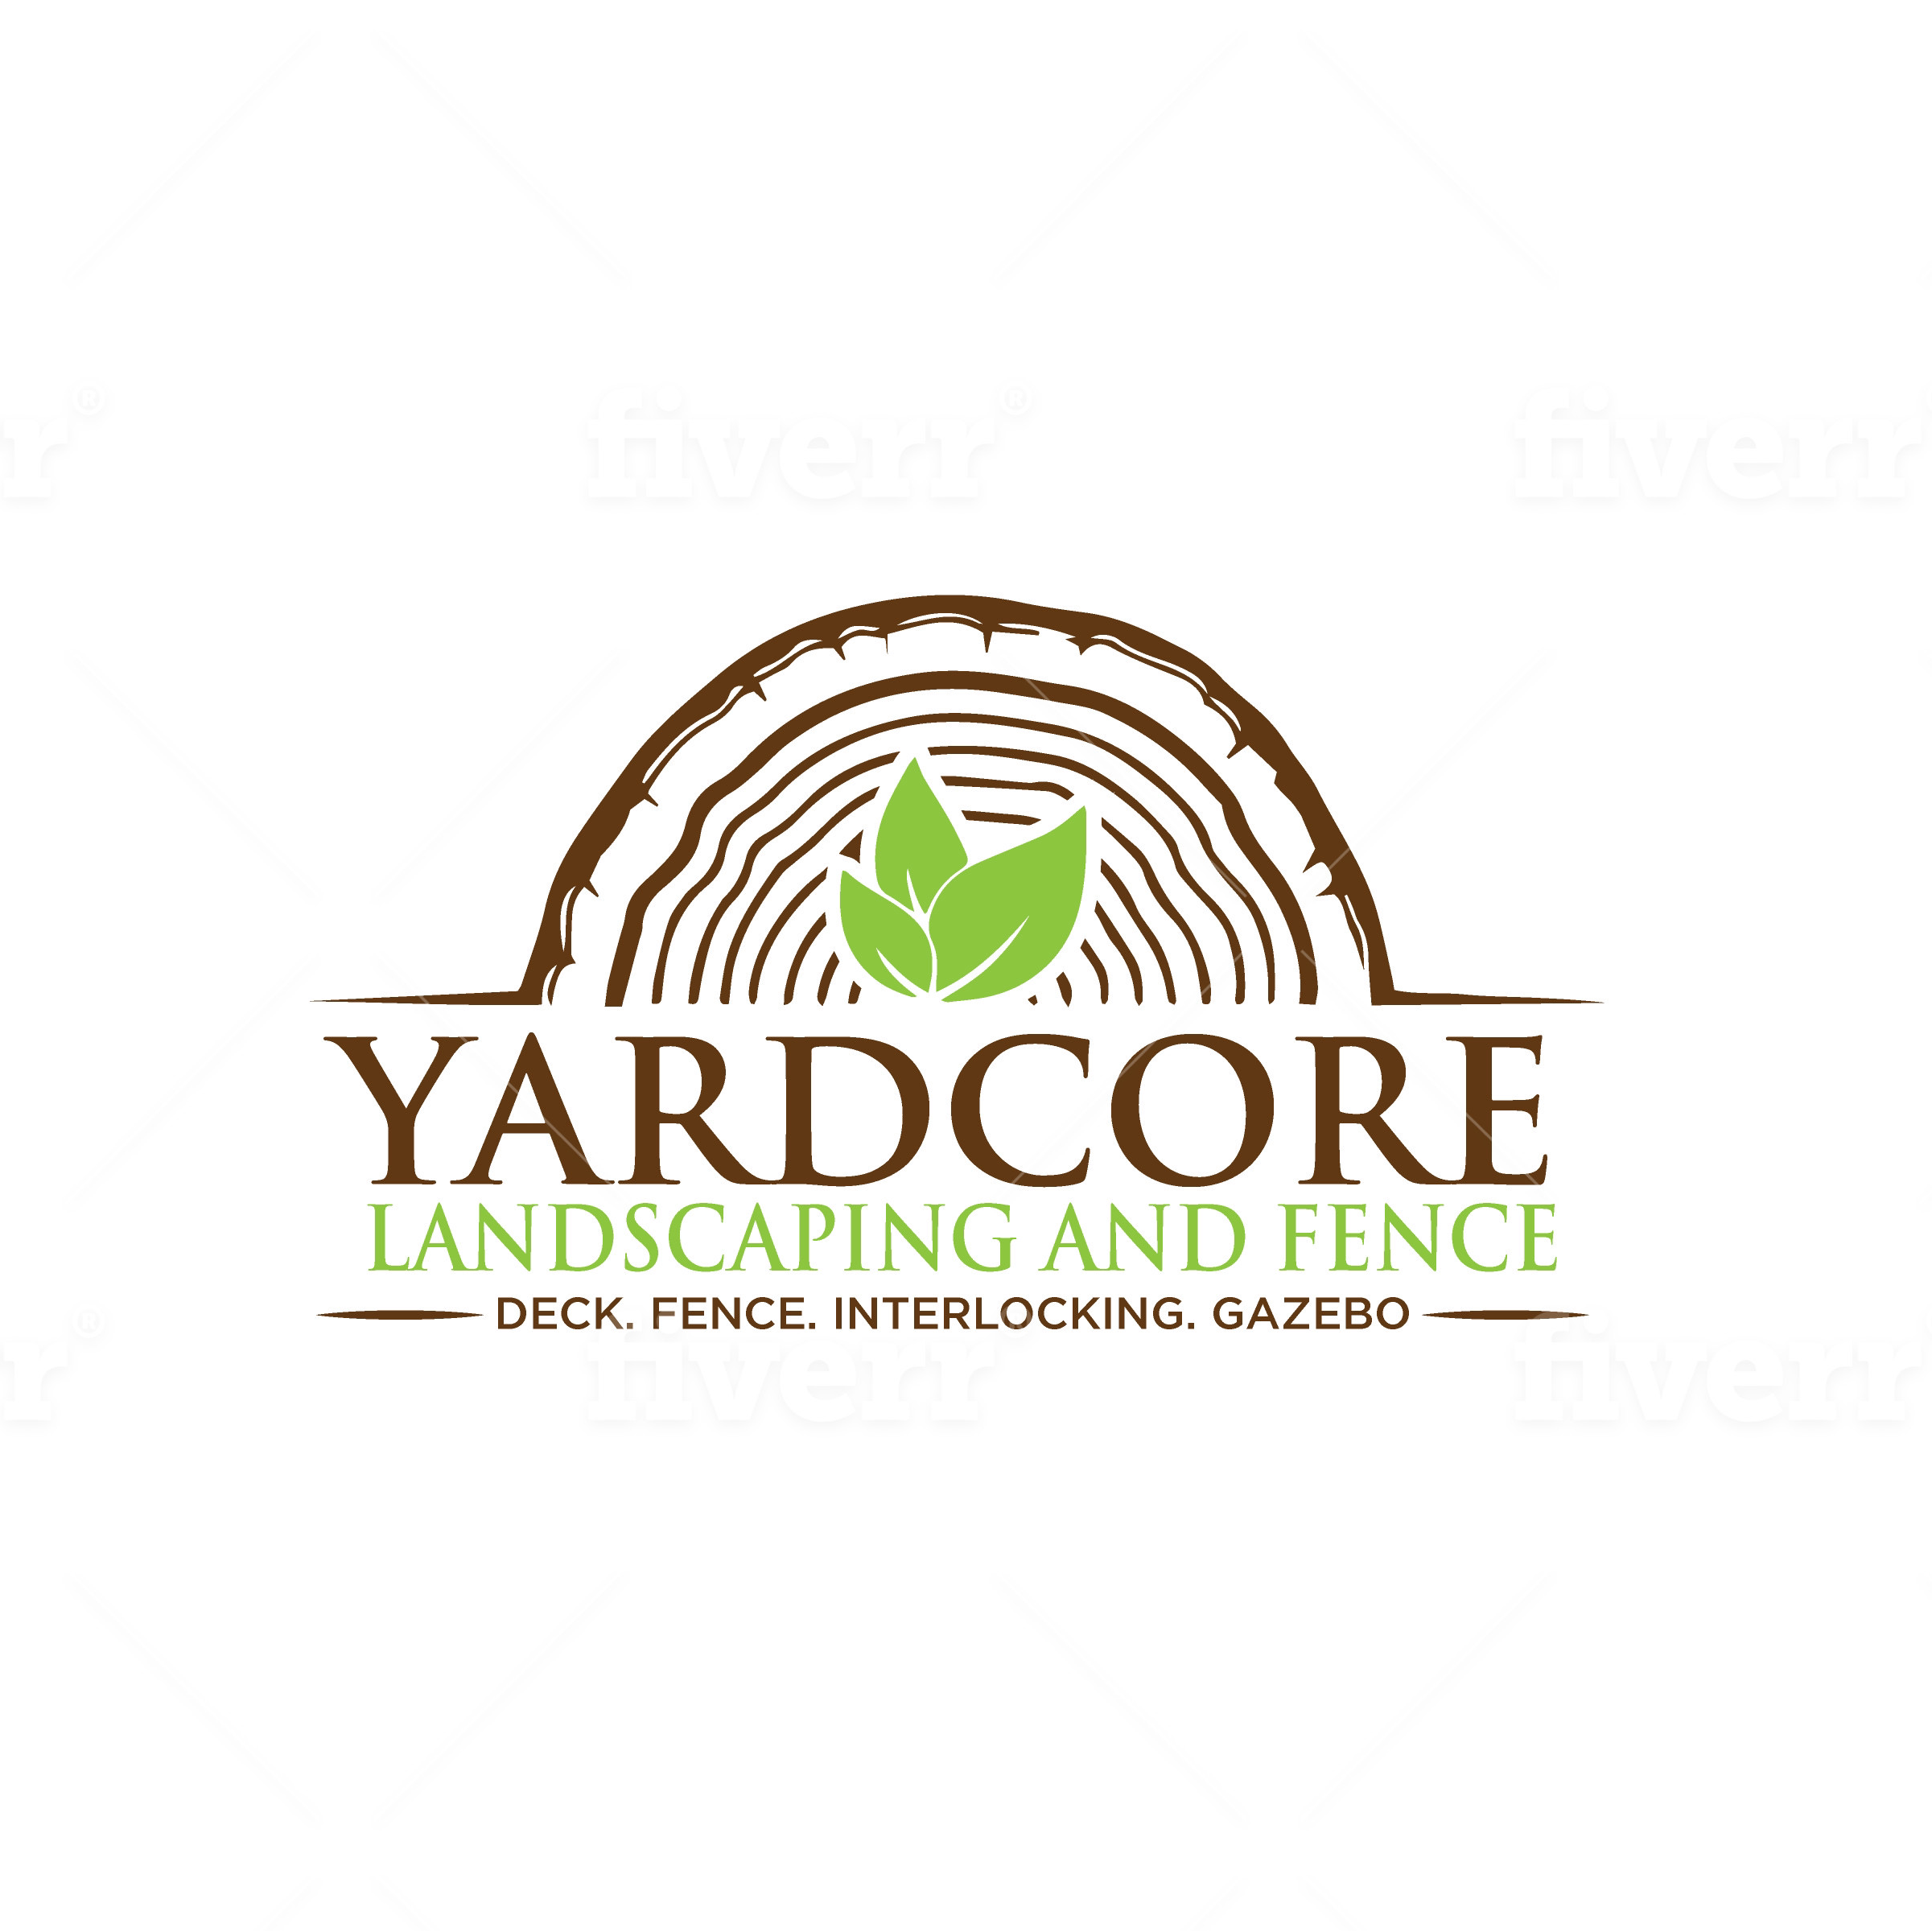 Yardcore Landscaping Design Inc.